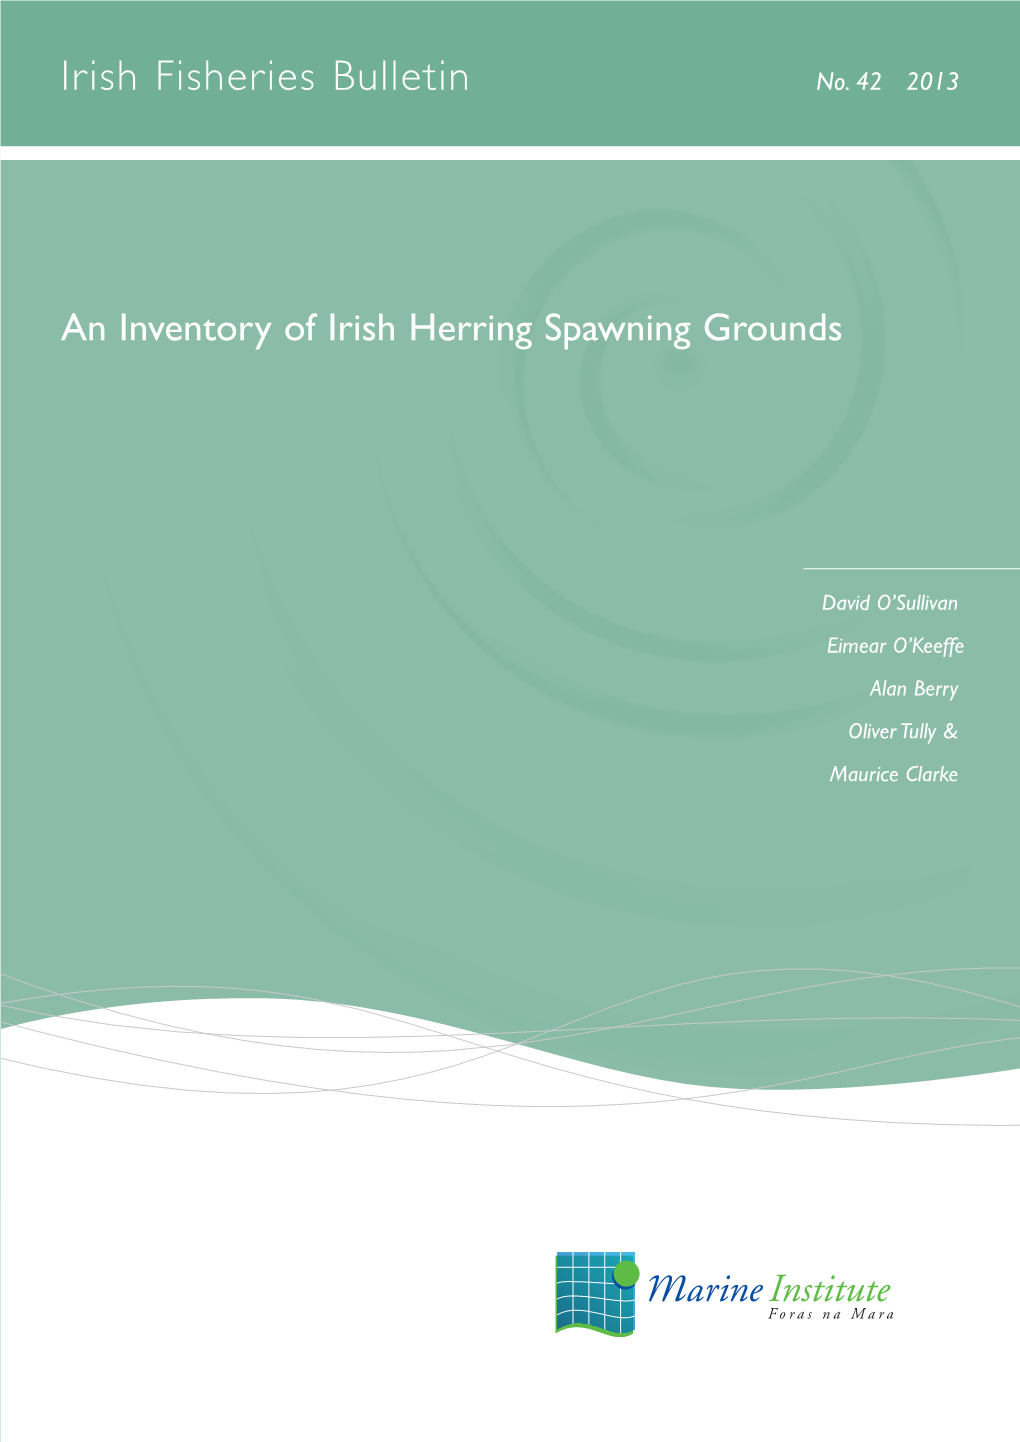 An Inventory of Irish Herring Spawning Grounds